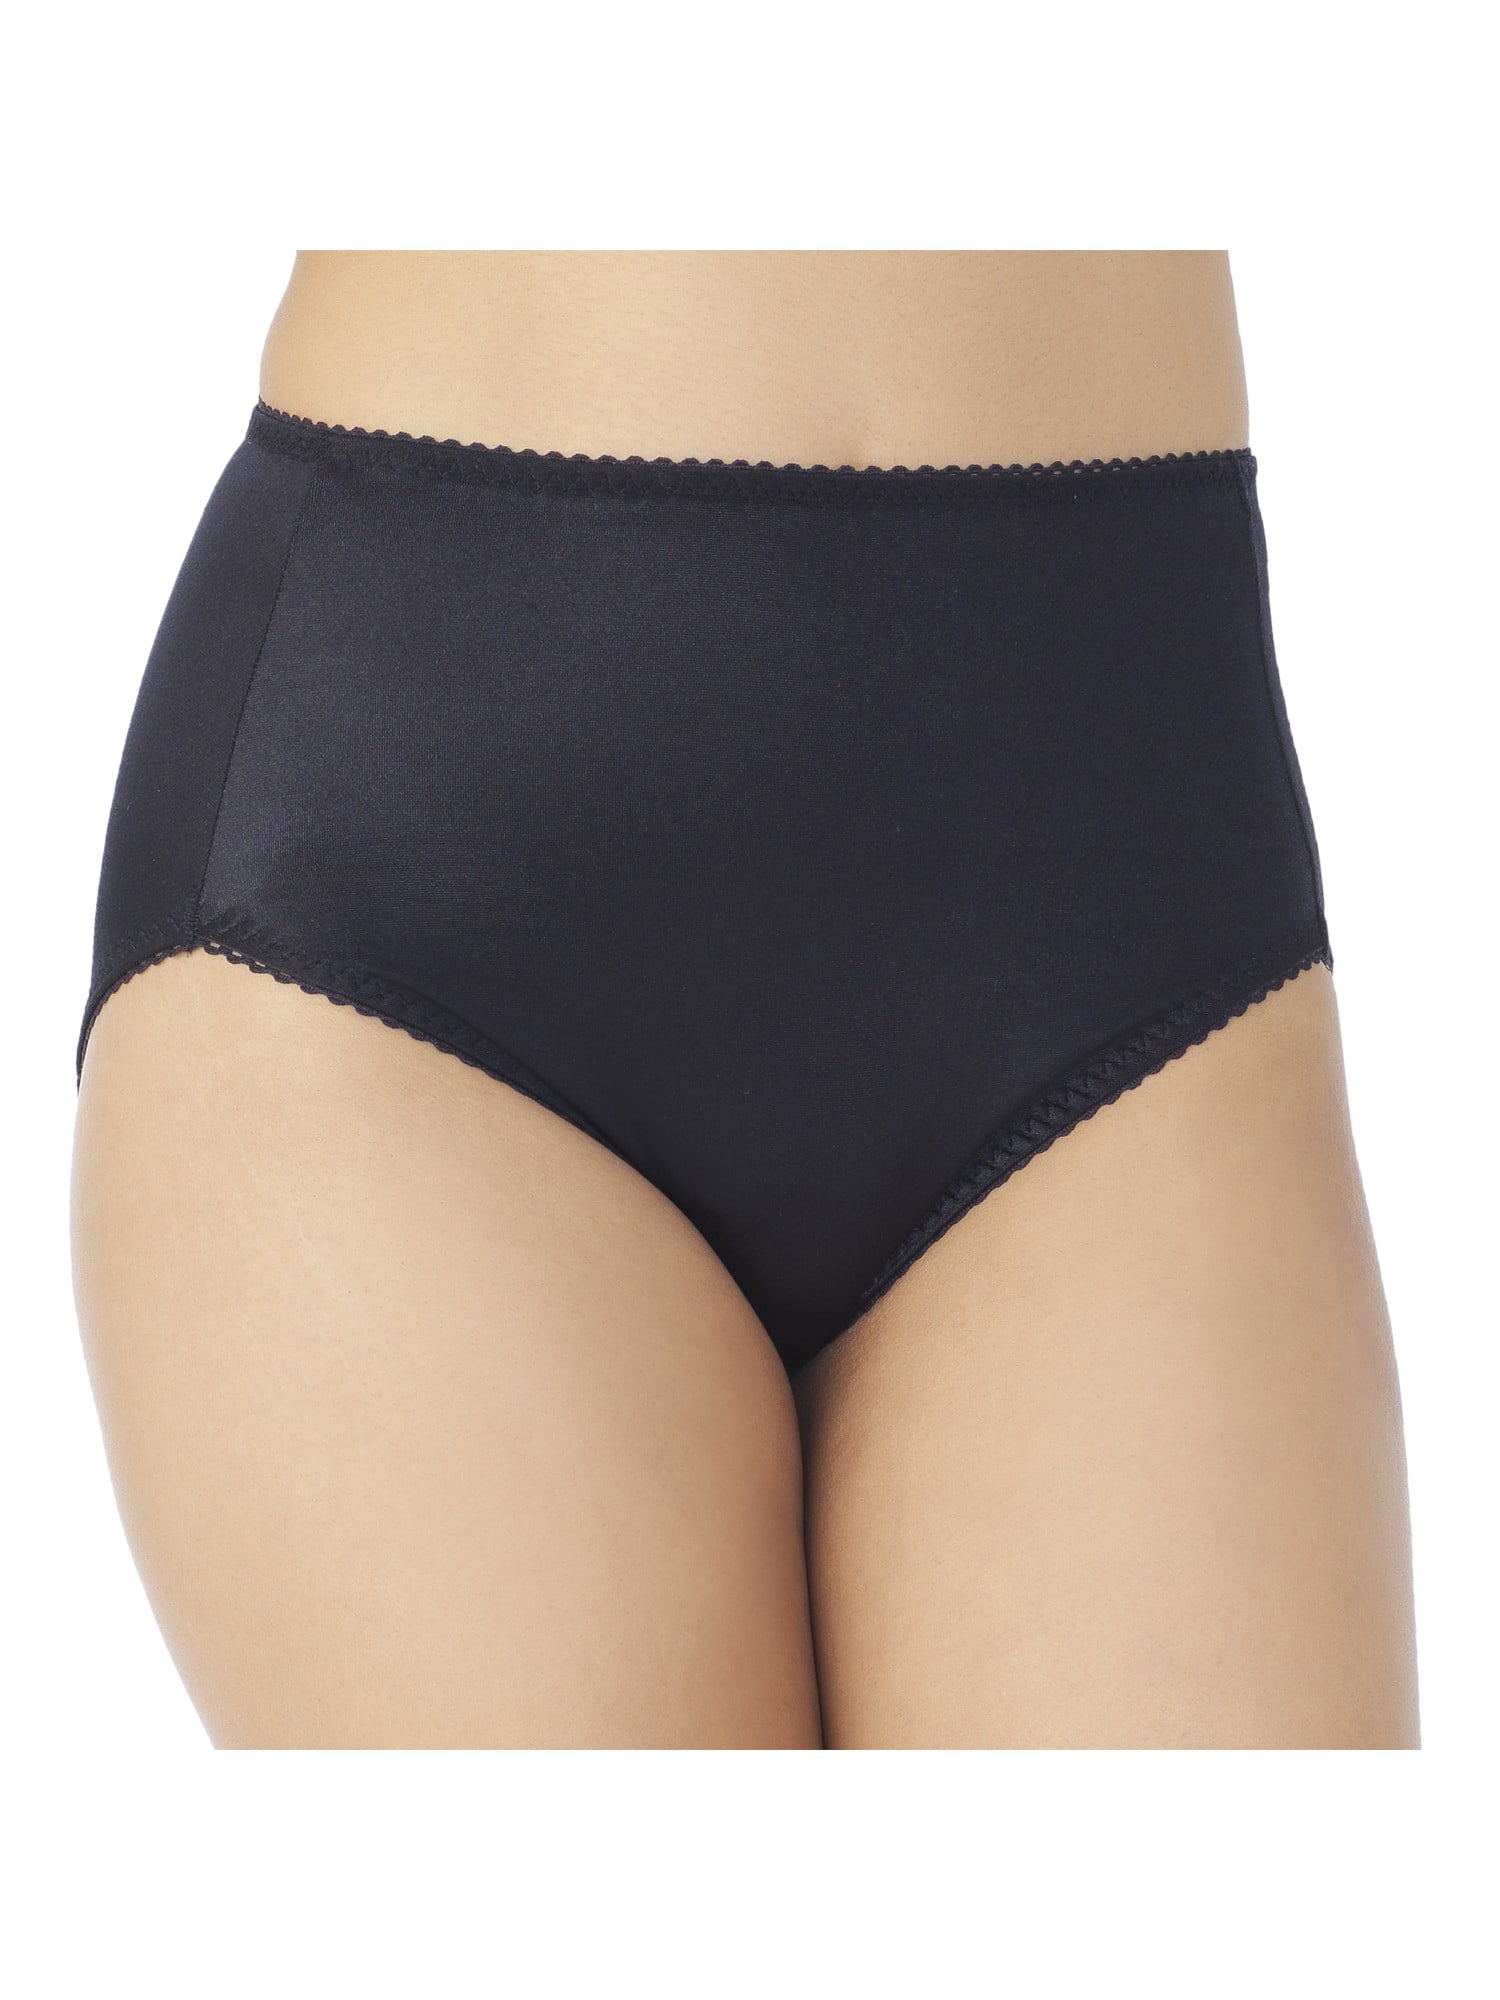 Women's Vassarette 12383 Invisibly Smooth Boyshort Panty (Black Sable XL)